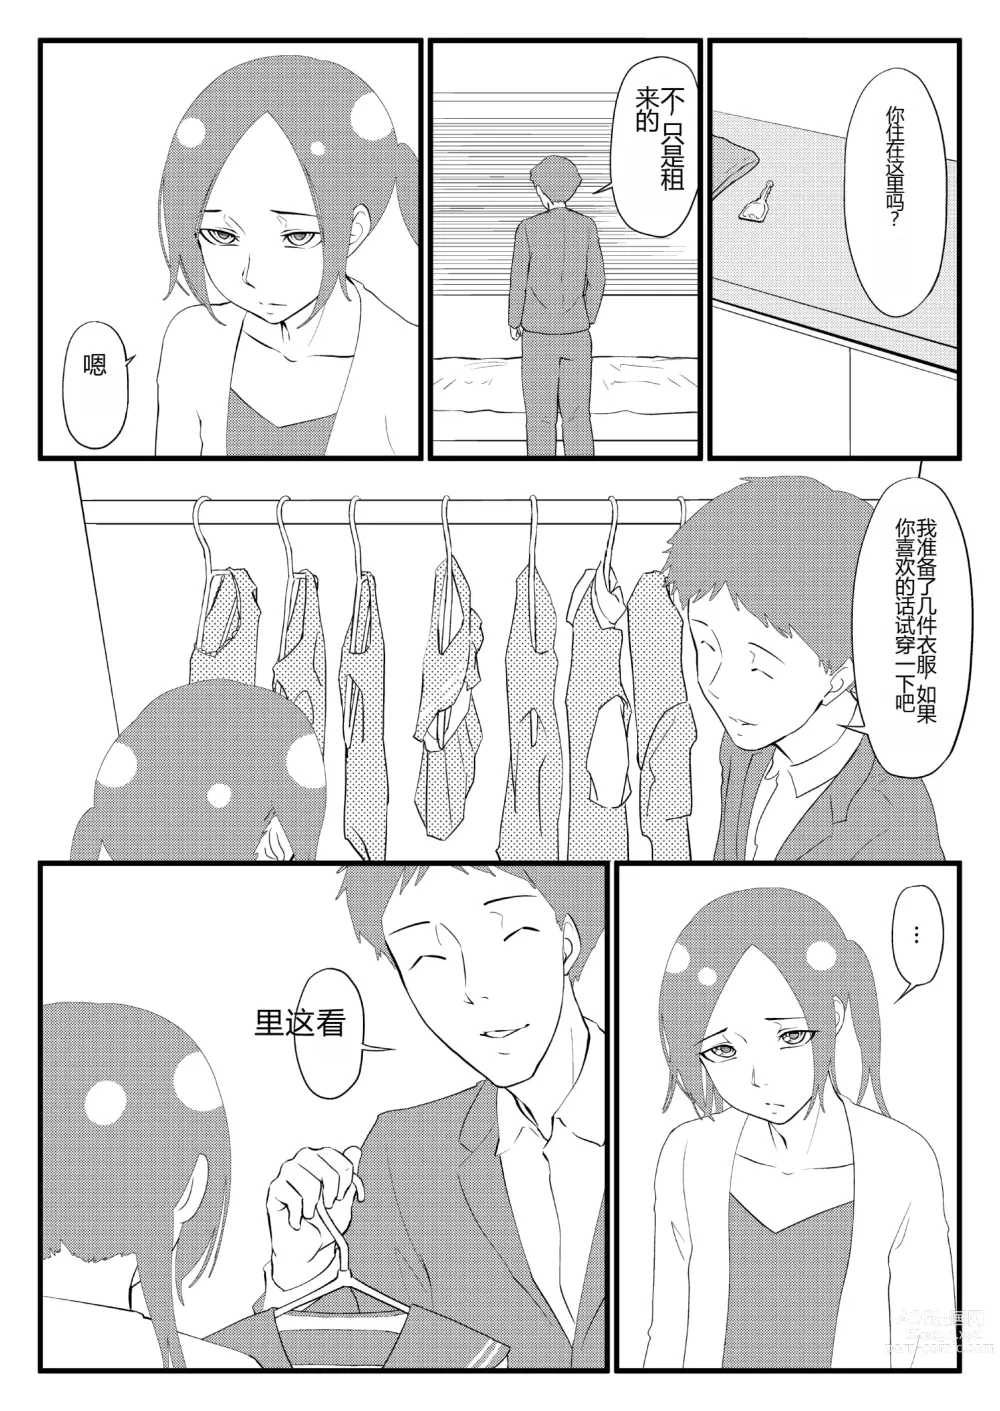 Page 10 of doujinshi Agitated Man